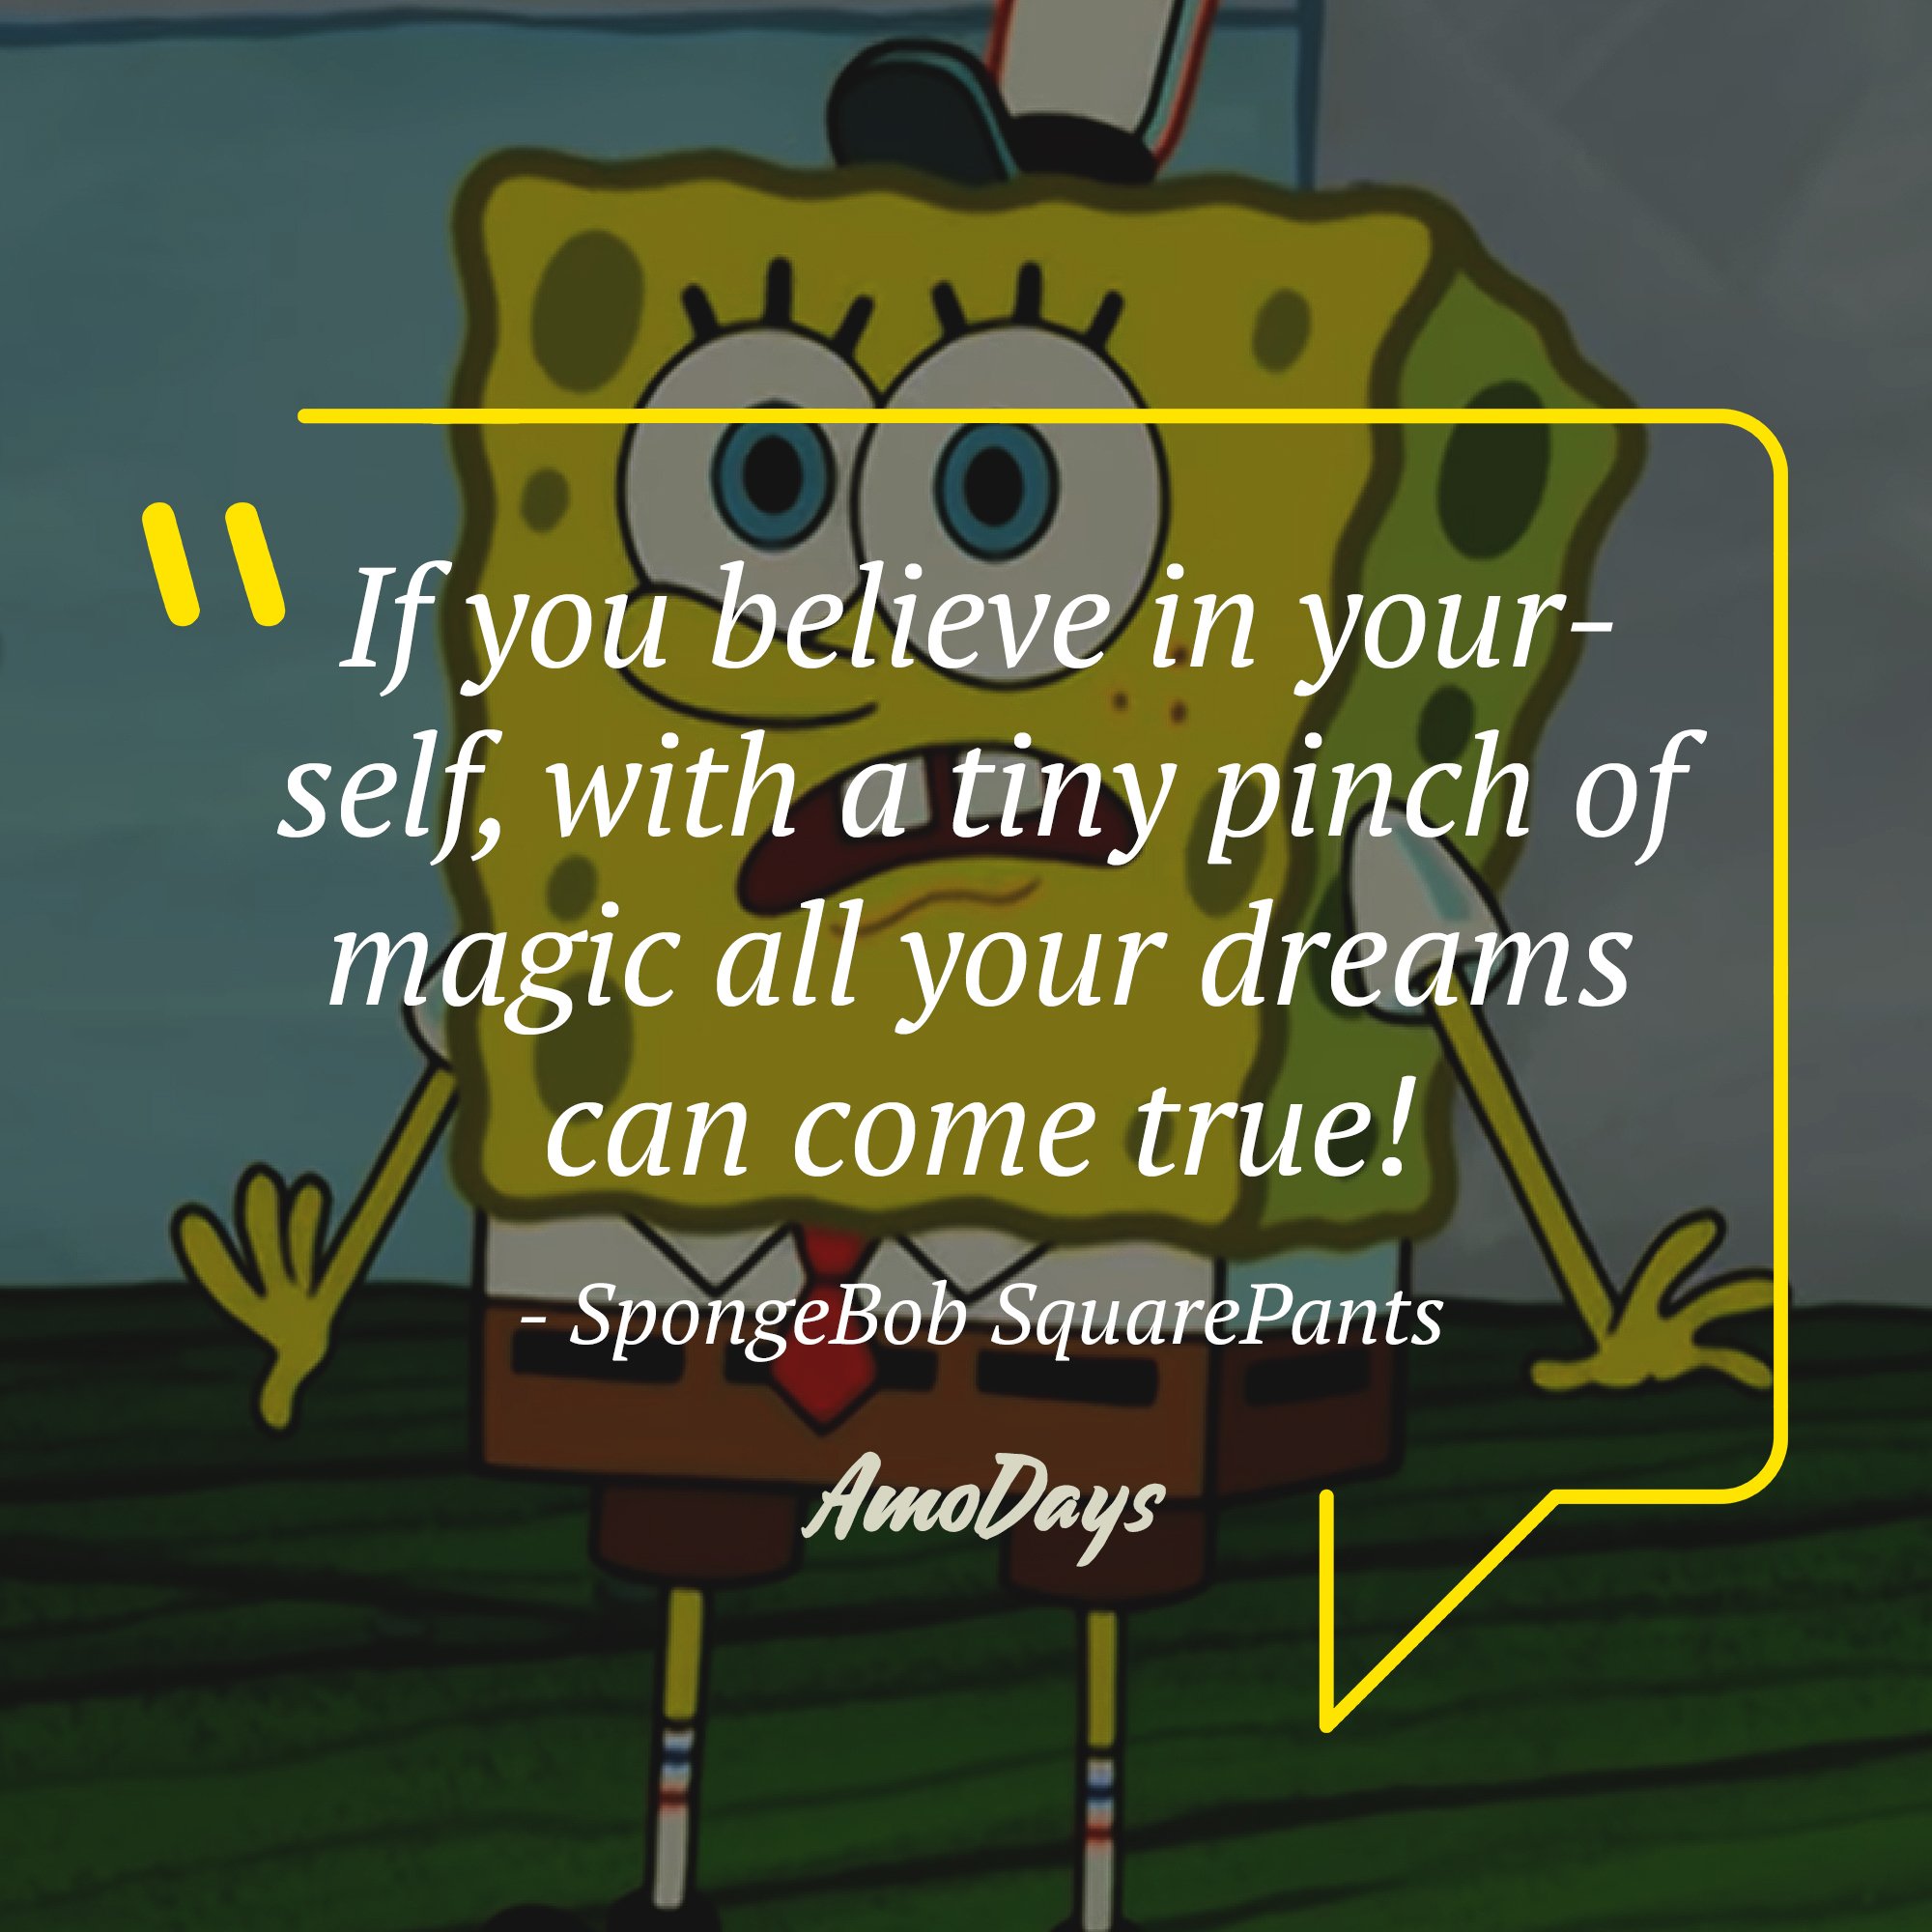 Spongebob Squarepants Quotes About Life